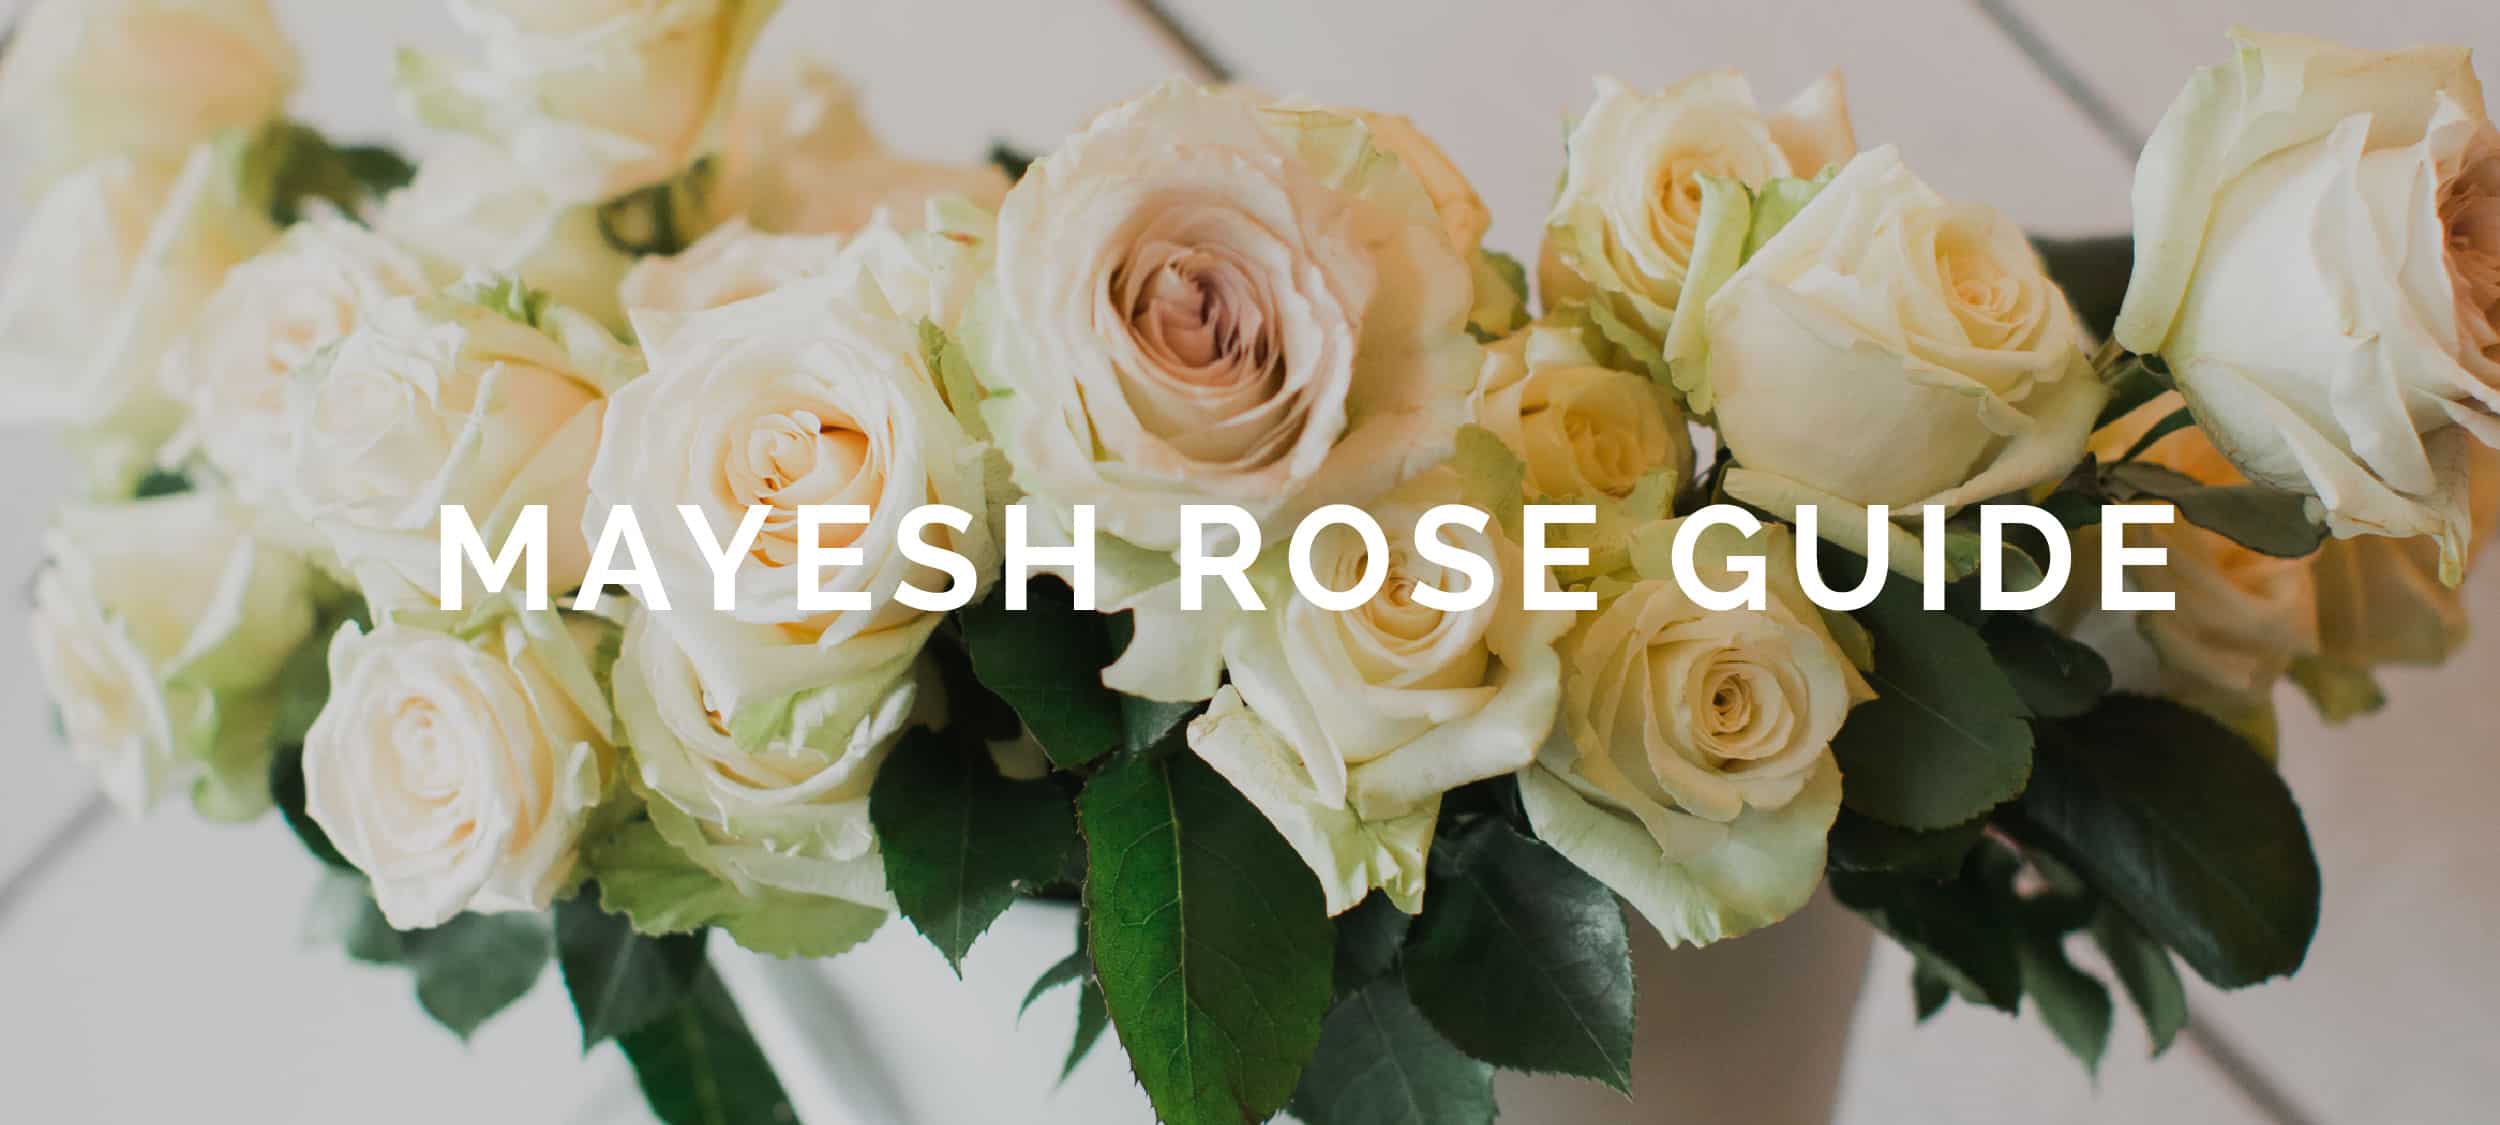 Mayesh Rose Guide Download